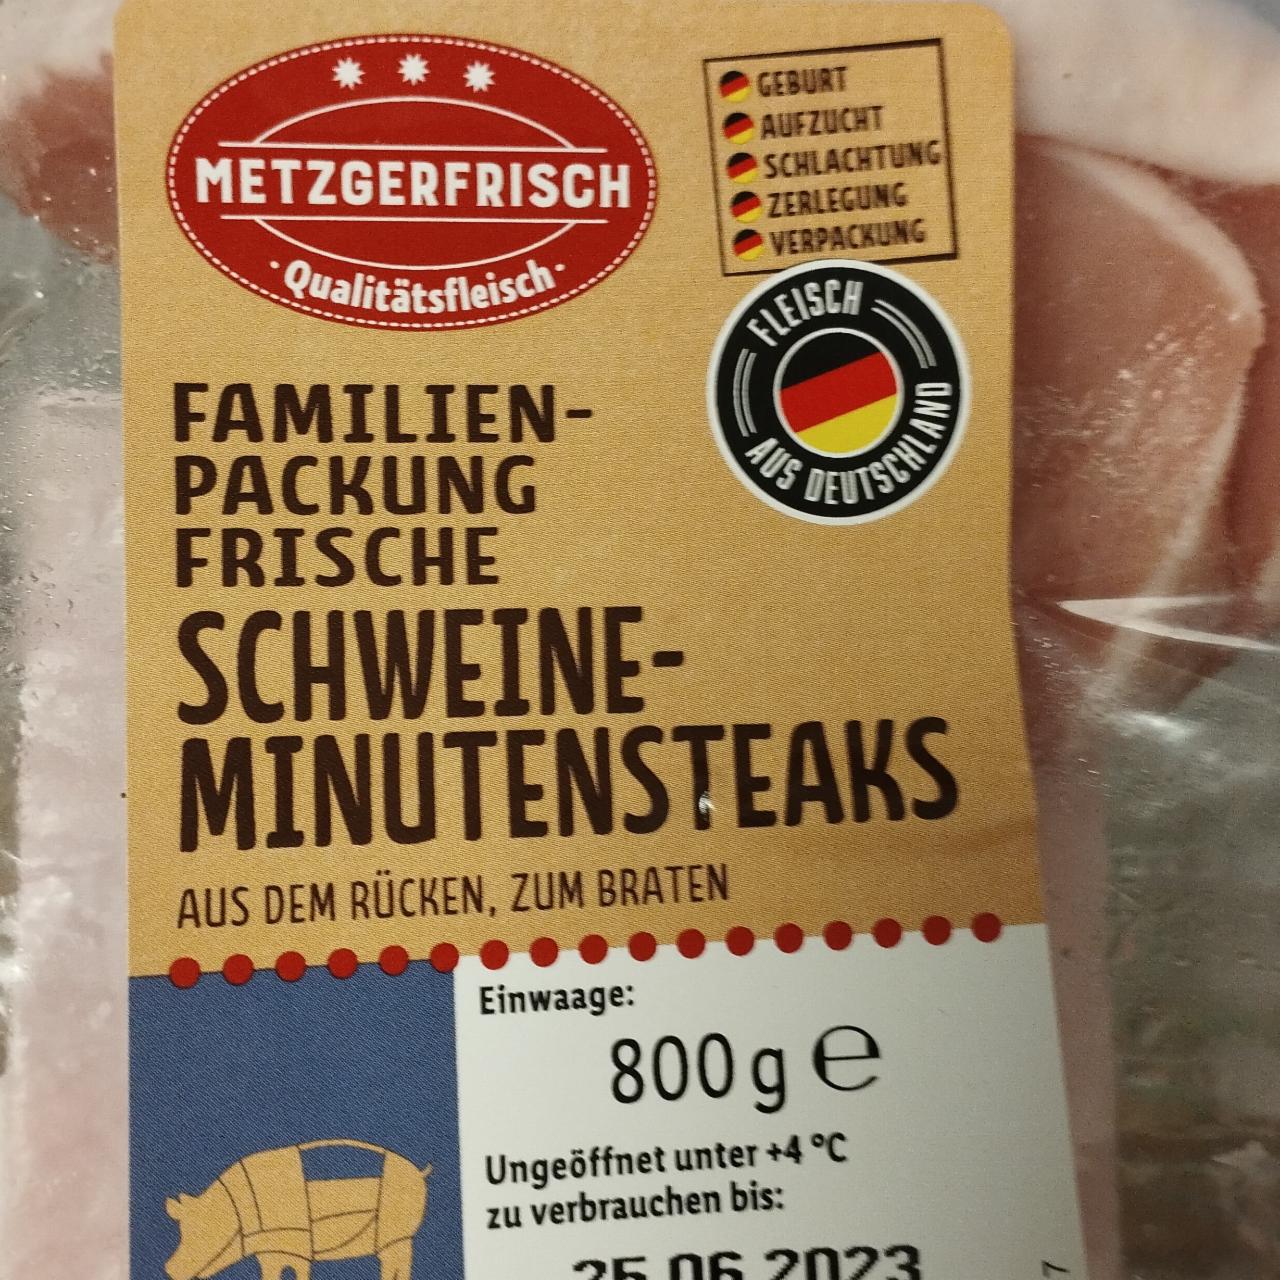 Familien-packung frische калорійність, - цінність minutensteaks Metzgerfrisch schweine ⋙TablycjaKalorijnosti харчова